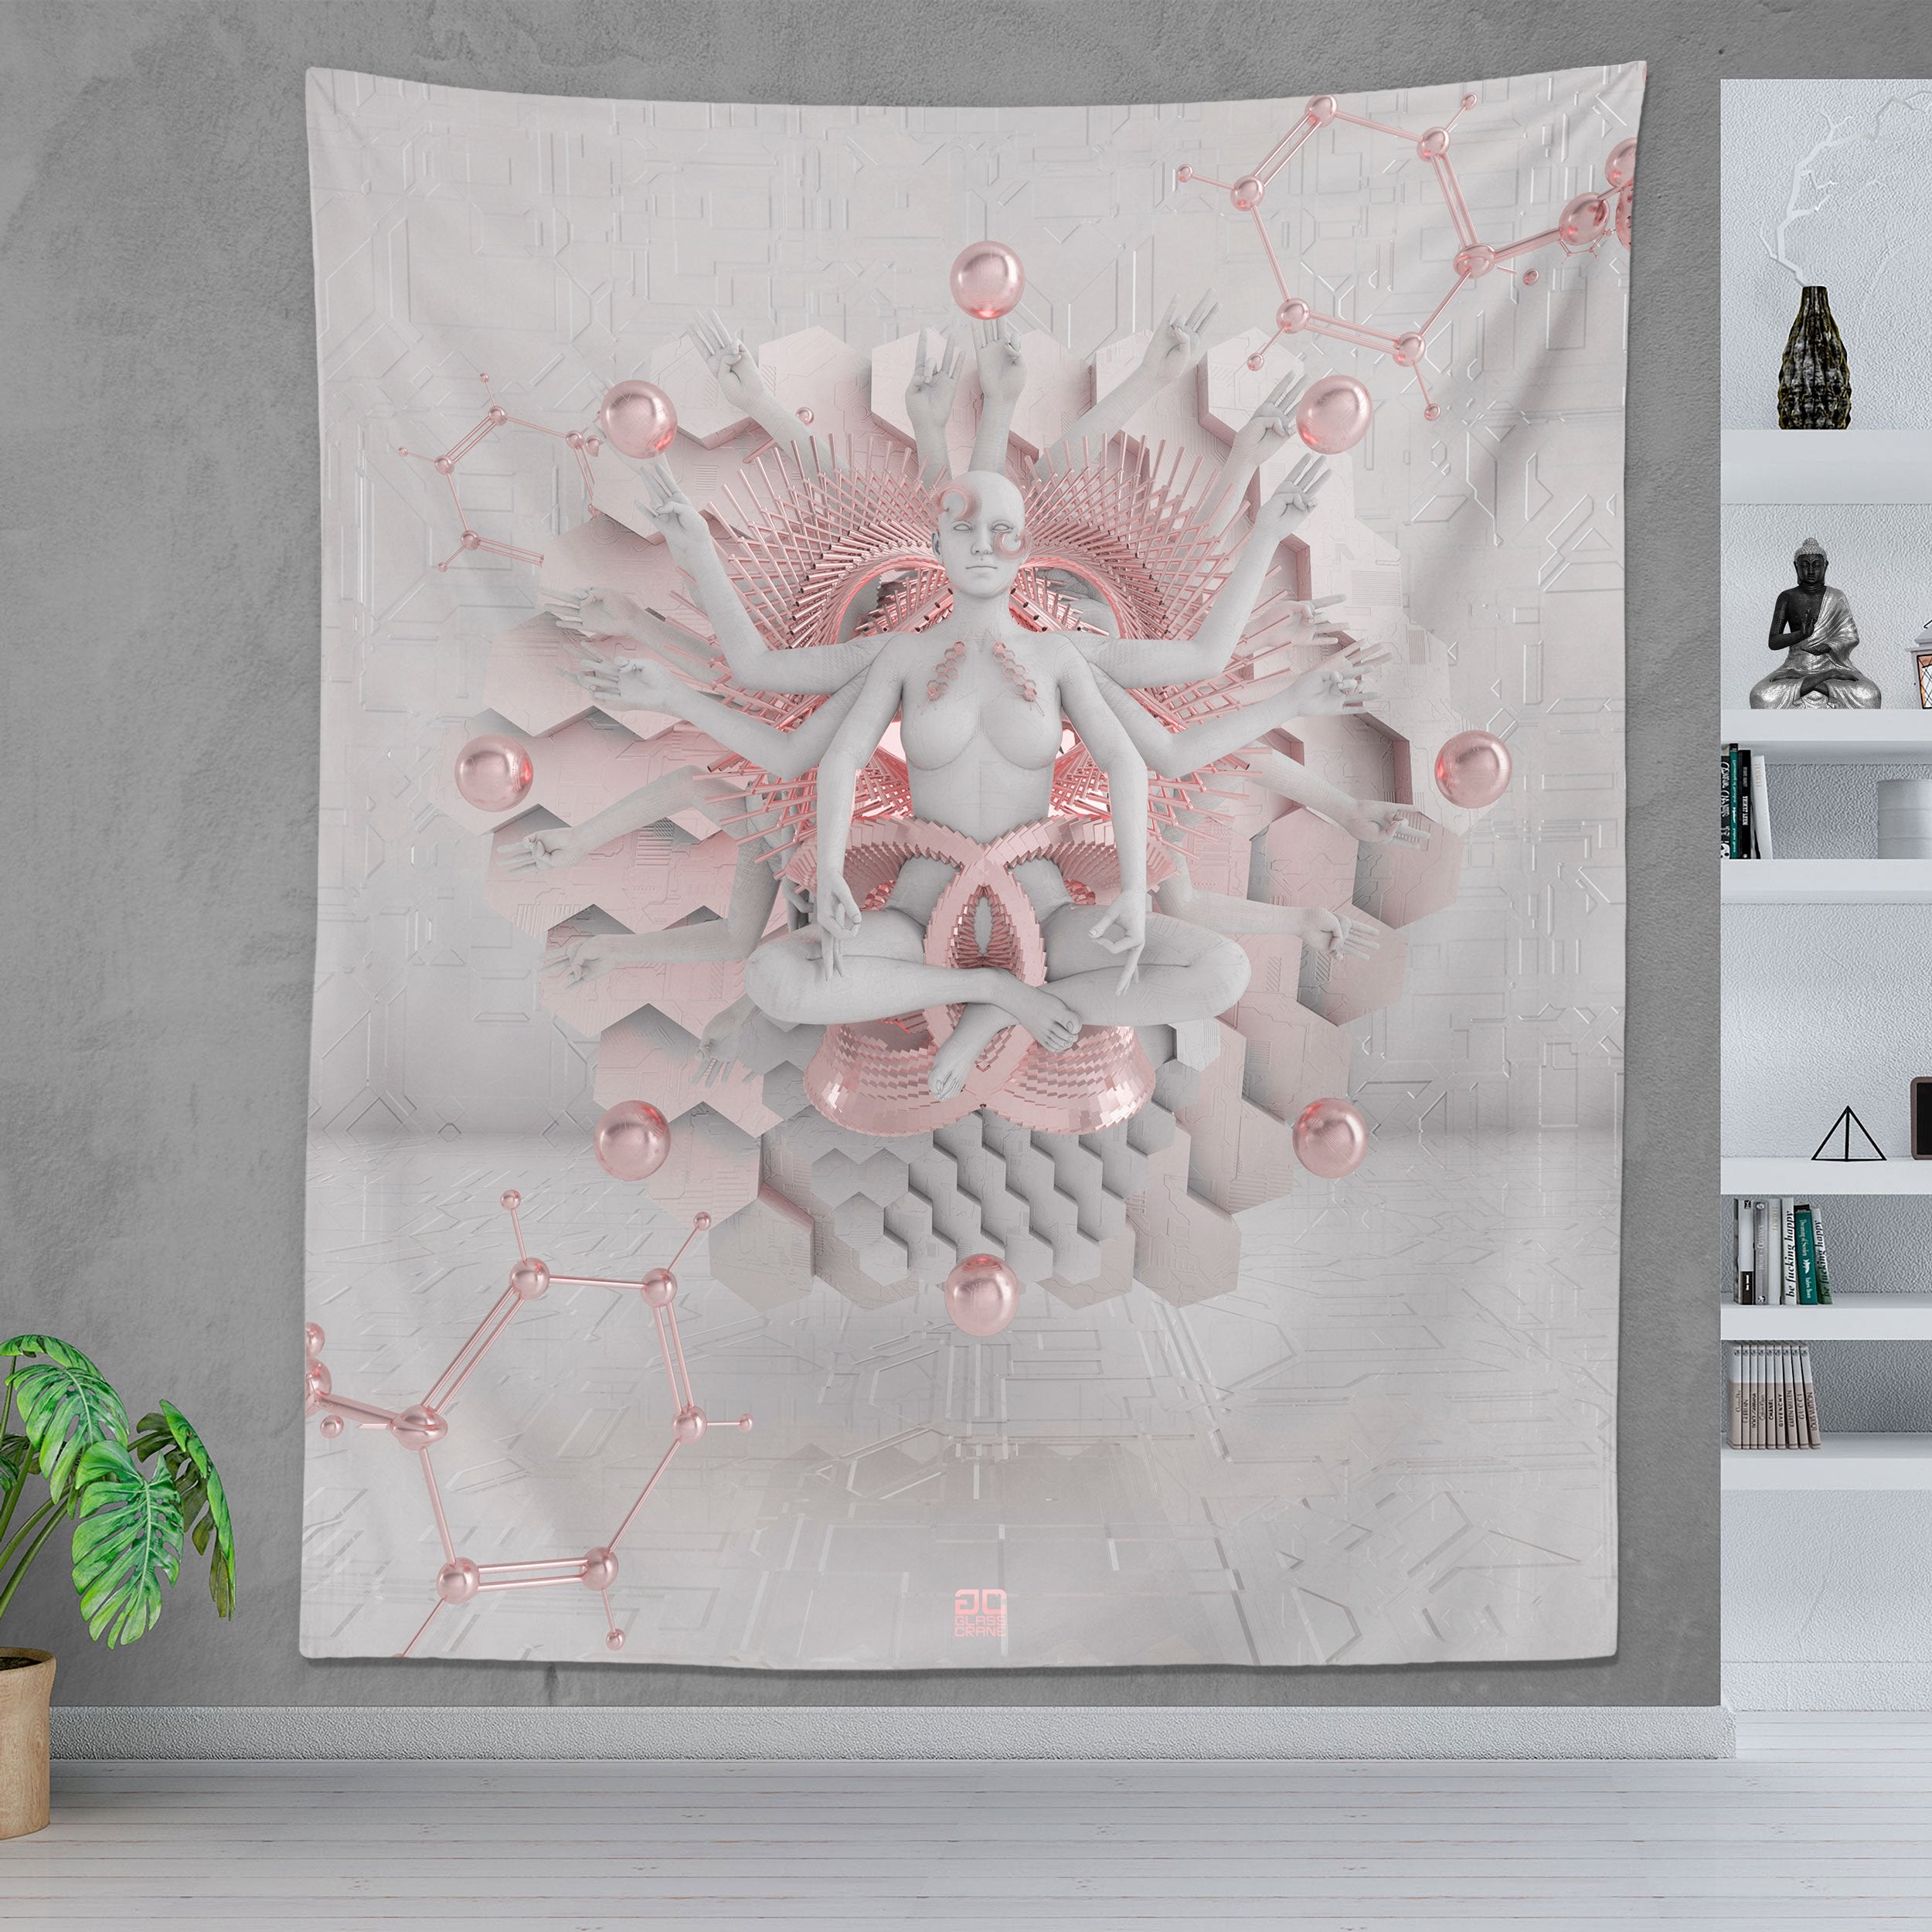 GOT EM • GLASS CRANE • Wall Tapestry Tapestry 